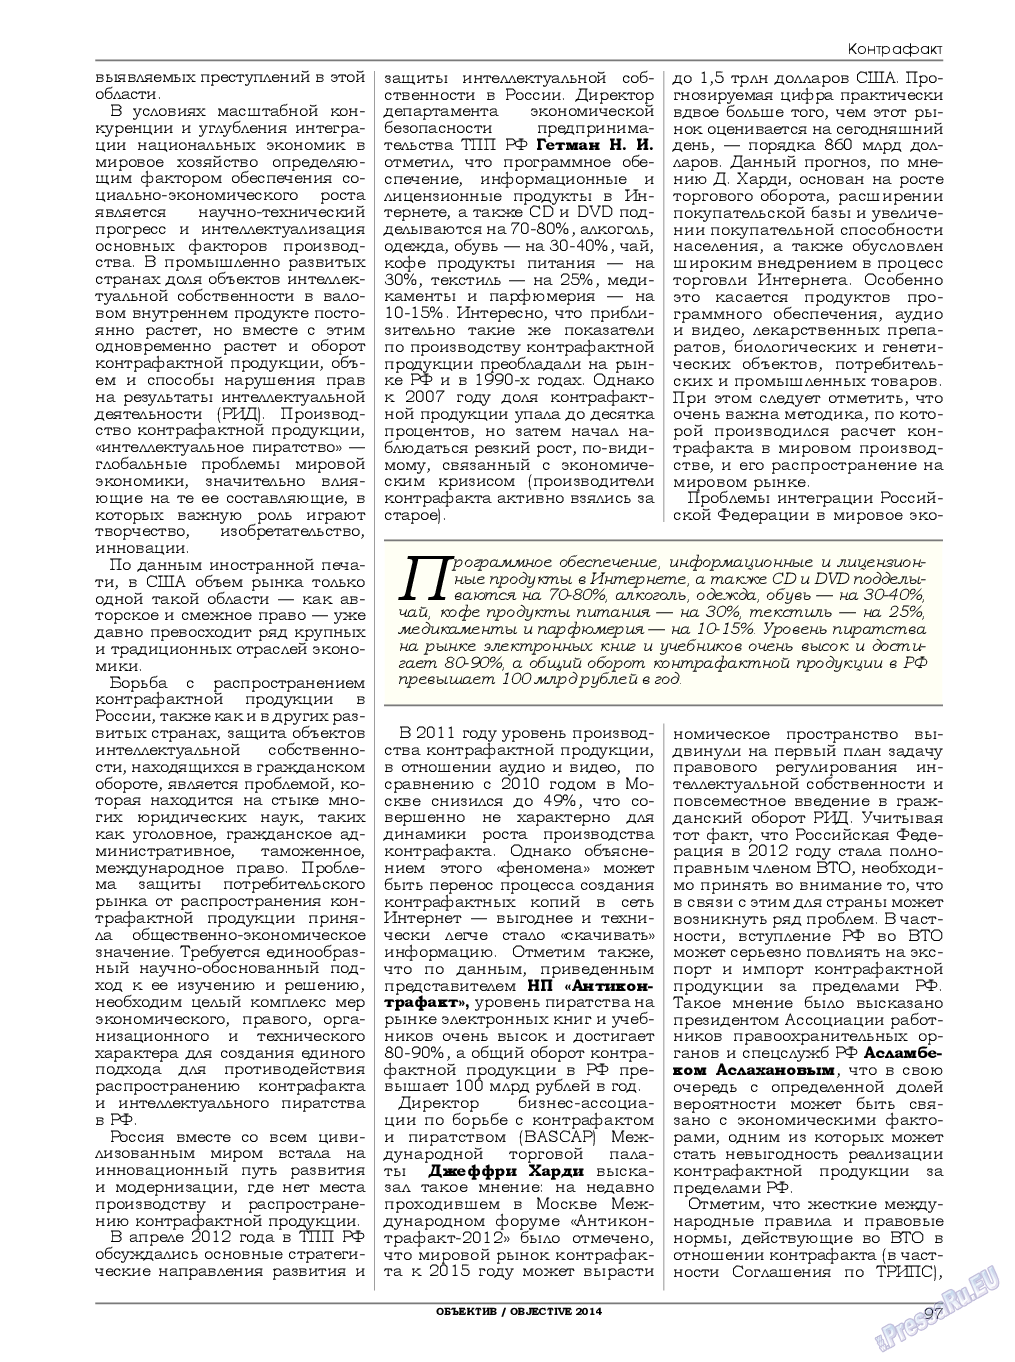 Объектив EU, журнал. 2014 №2 стр.97